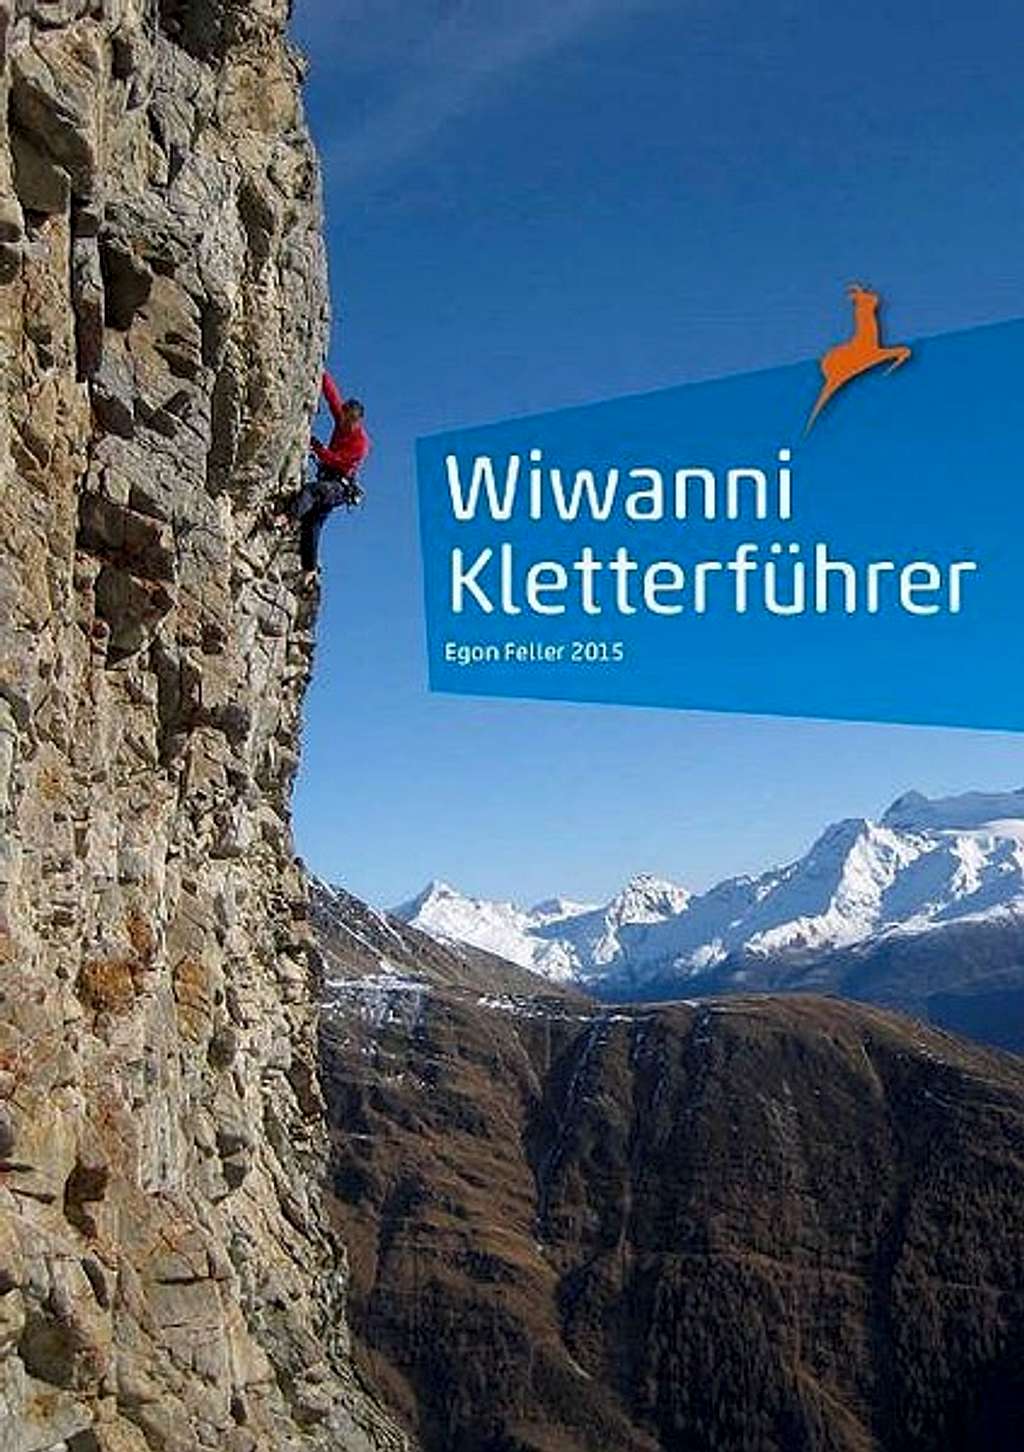 Wiwanni climbing guidebook